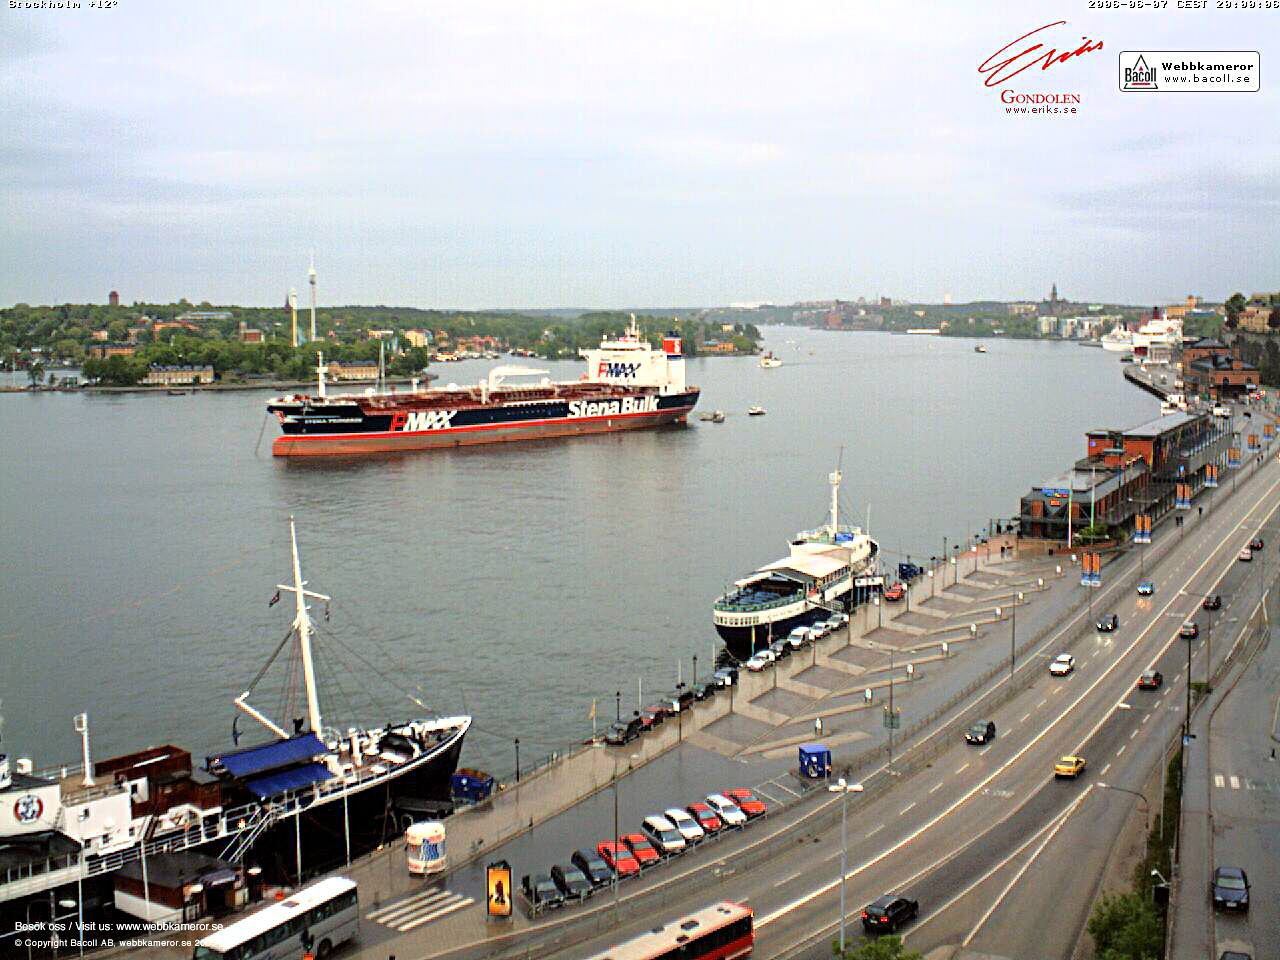 Webbkamera, Stockholm, webcam, väder, weather, Stena Bulk, fartyg